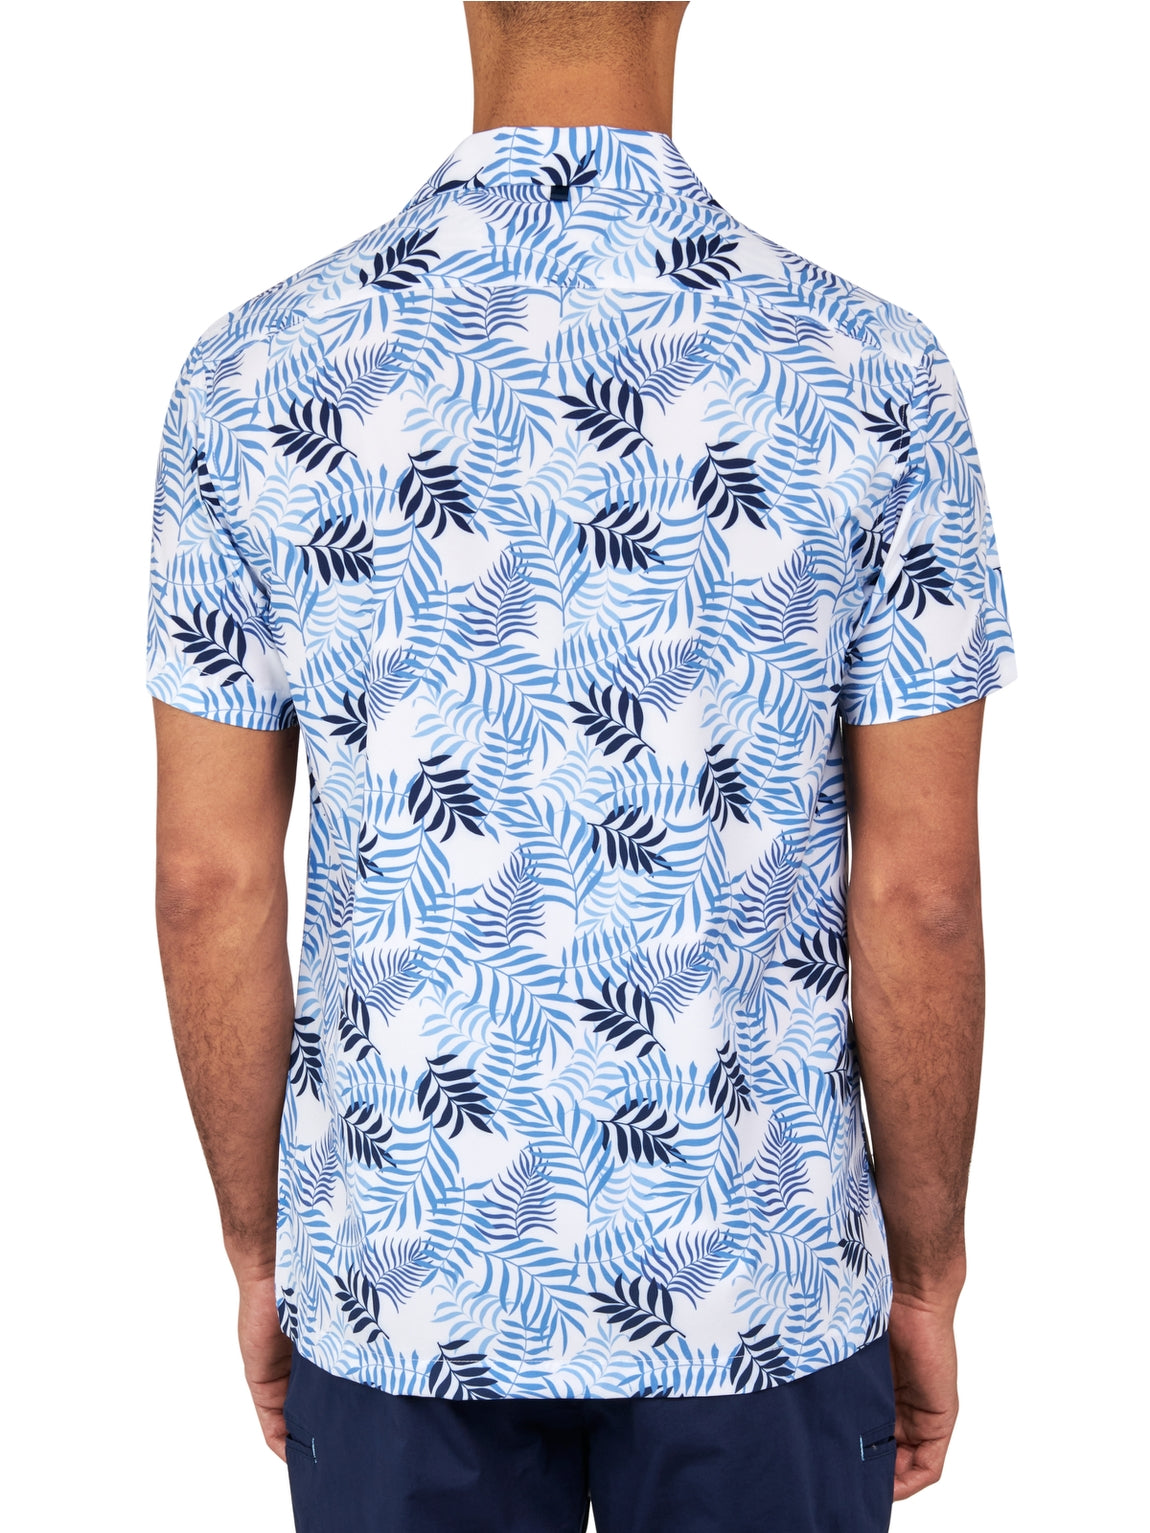 Tropical Camp Shirt by W.R.K.